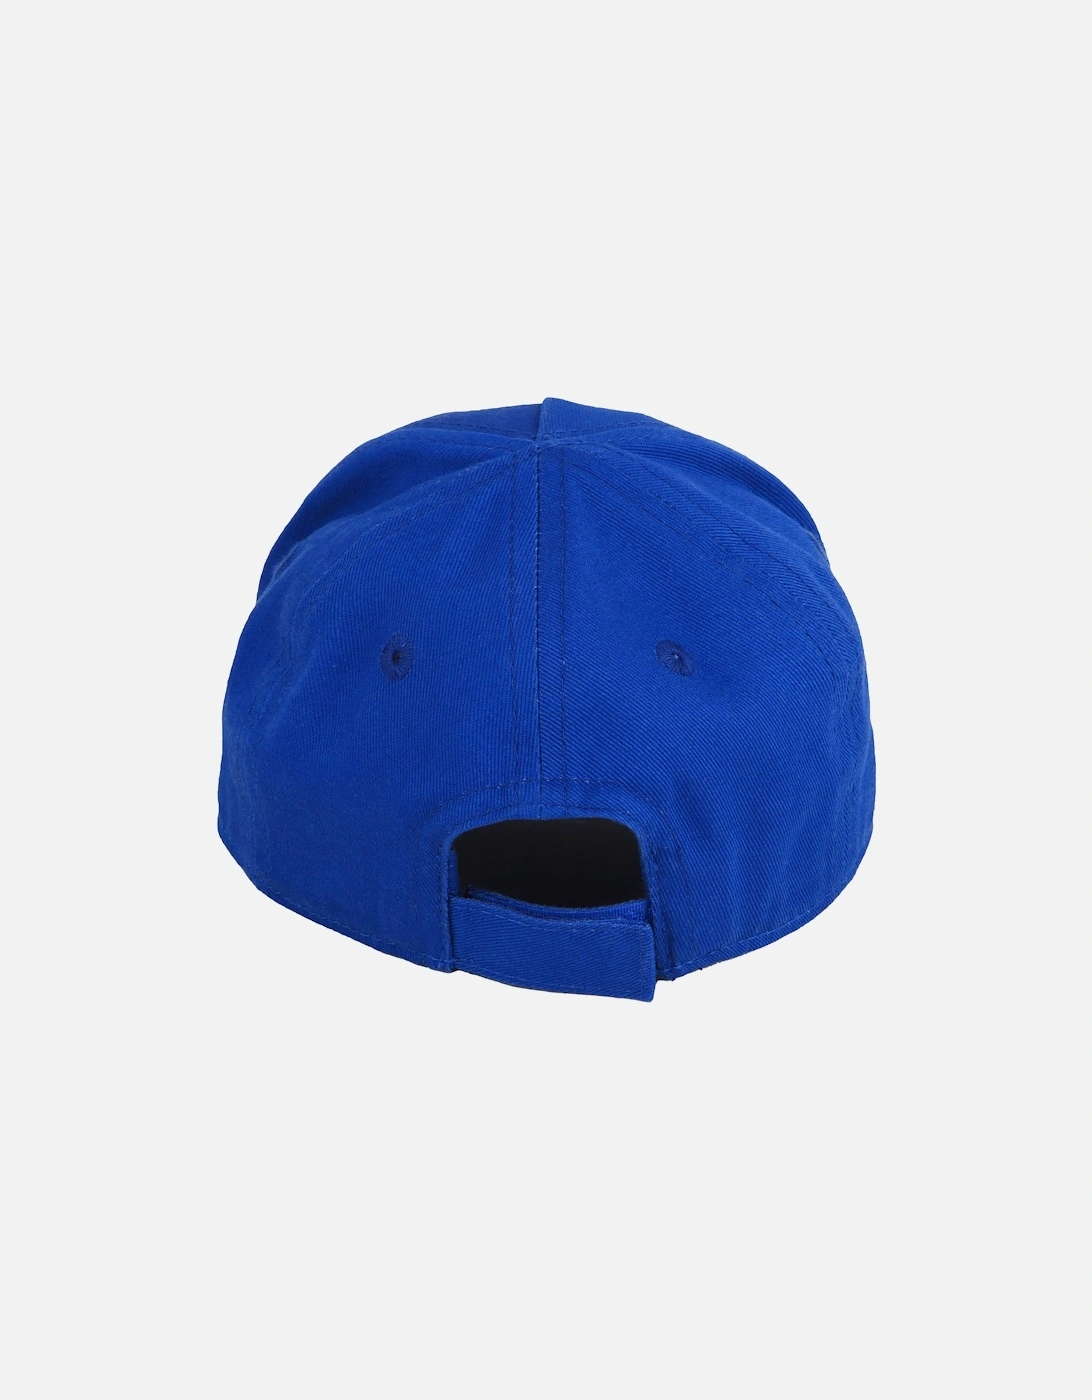 Infants Adjustable Cap (Blue)